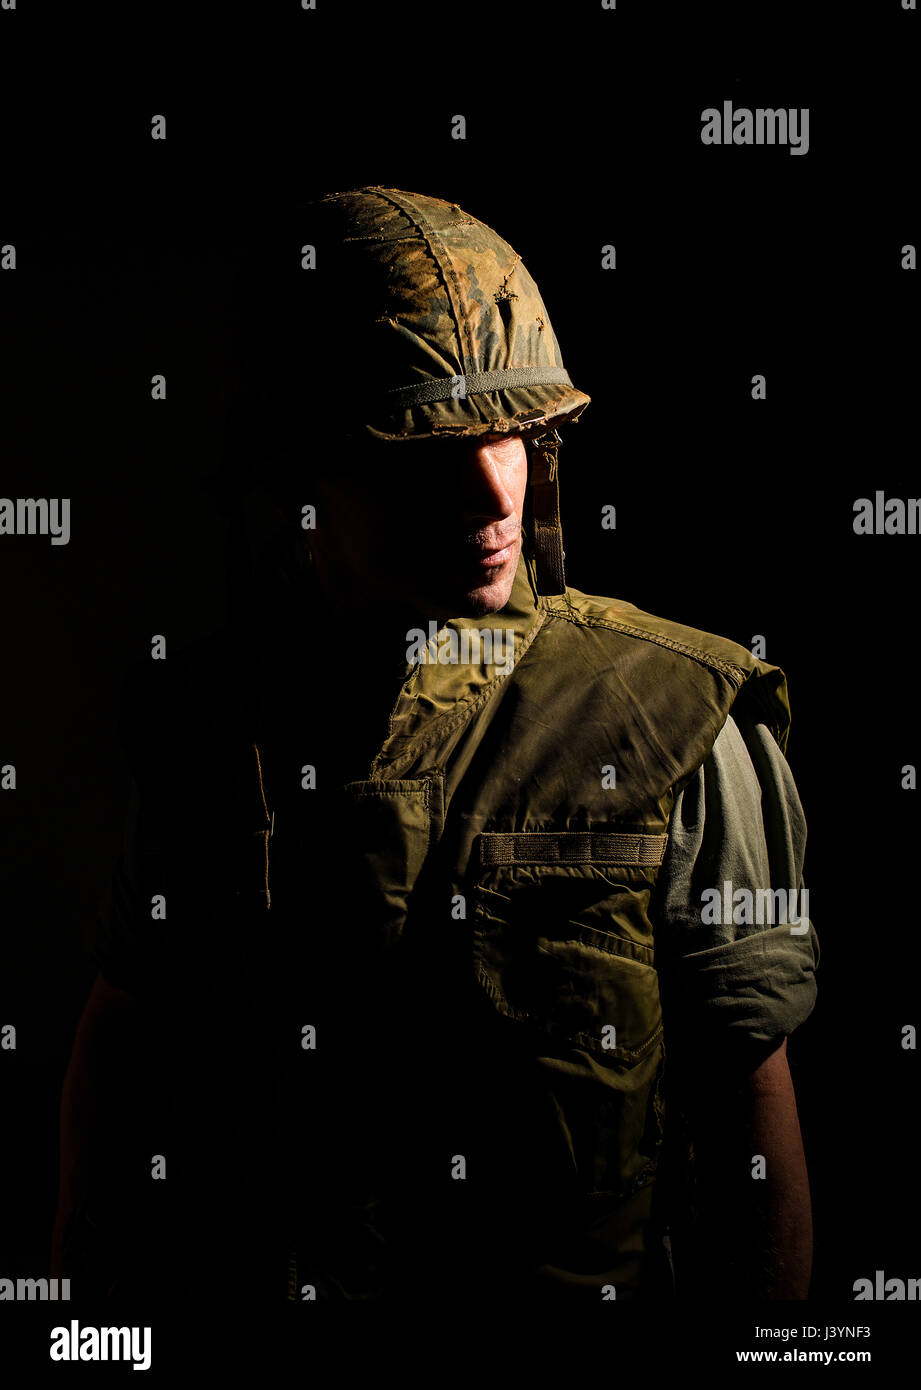 Dramatic portrait of US marine from the Vietnam War in dark shadows. Stock Photo